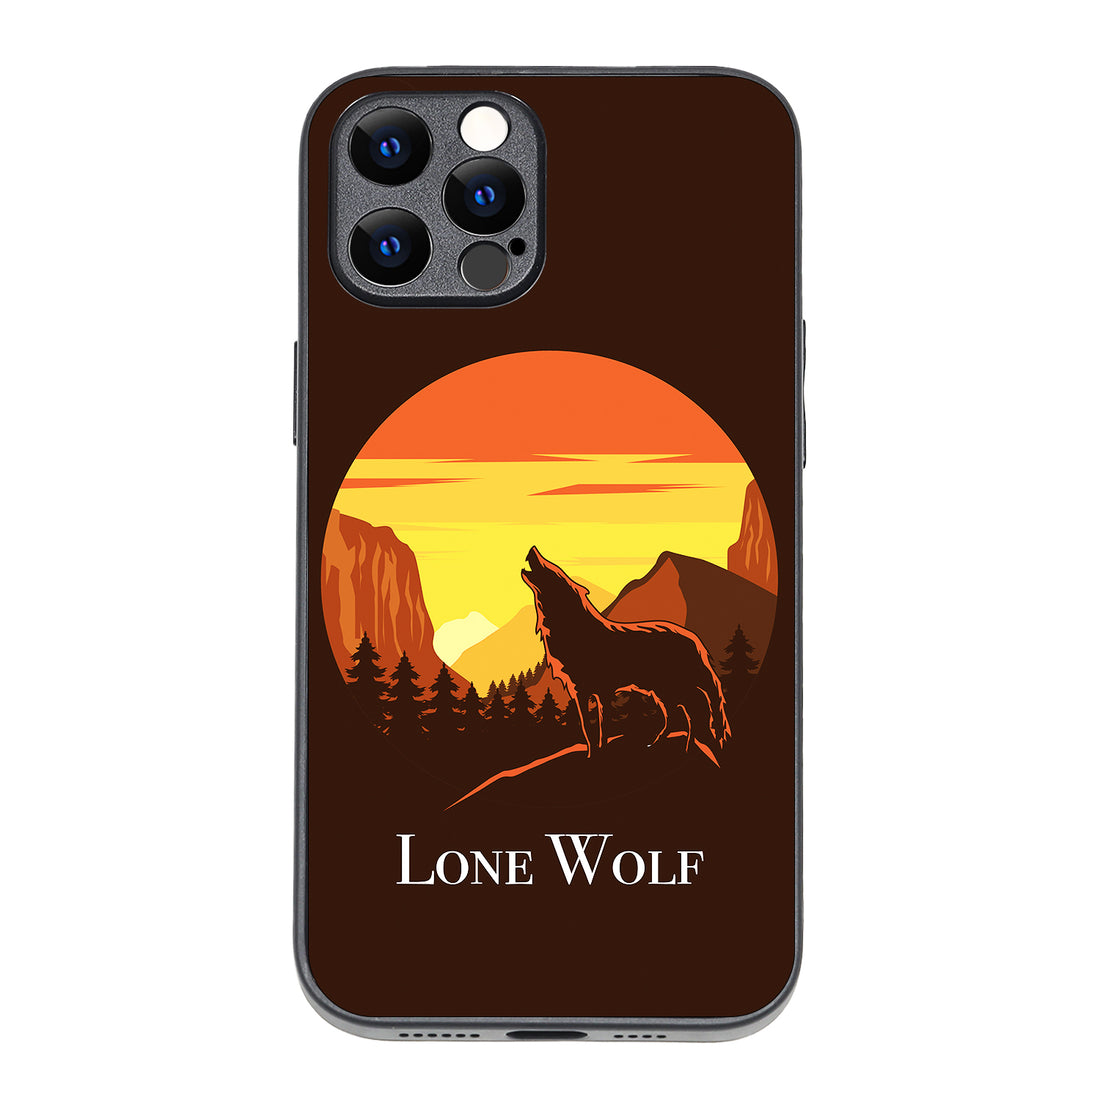 Lone Wolf Cartoon iPhone 12 Pro Max Case